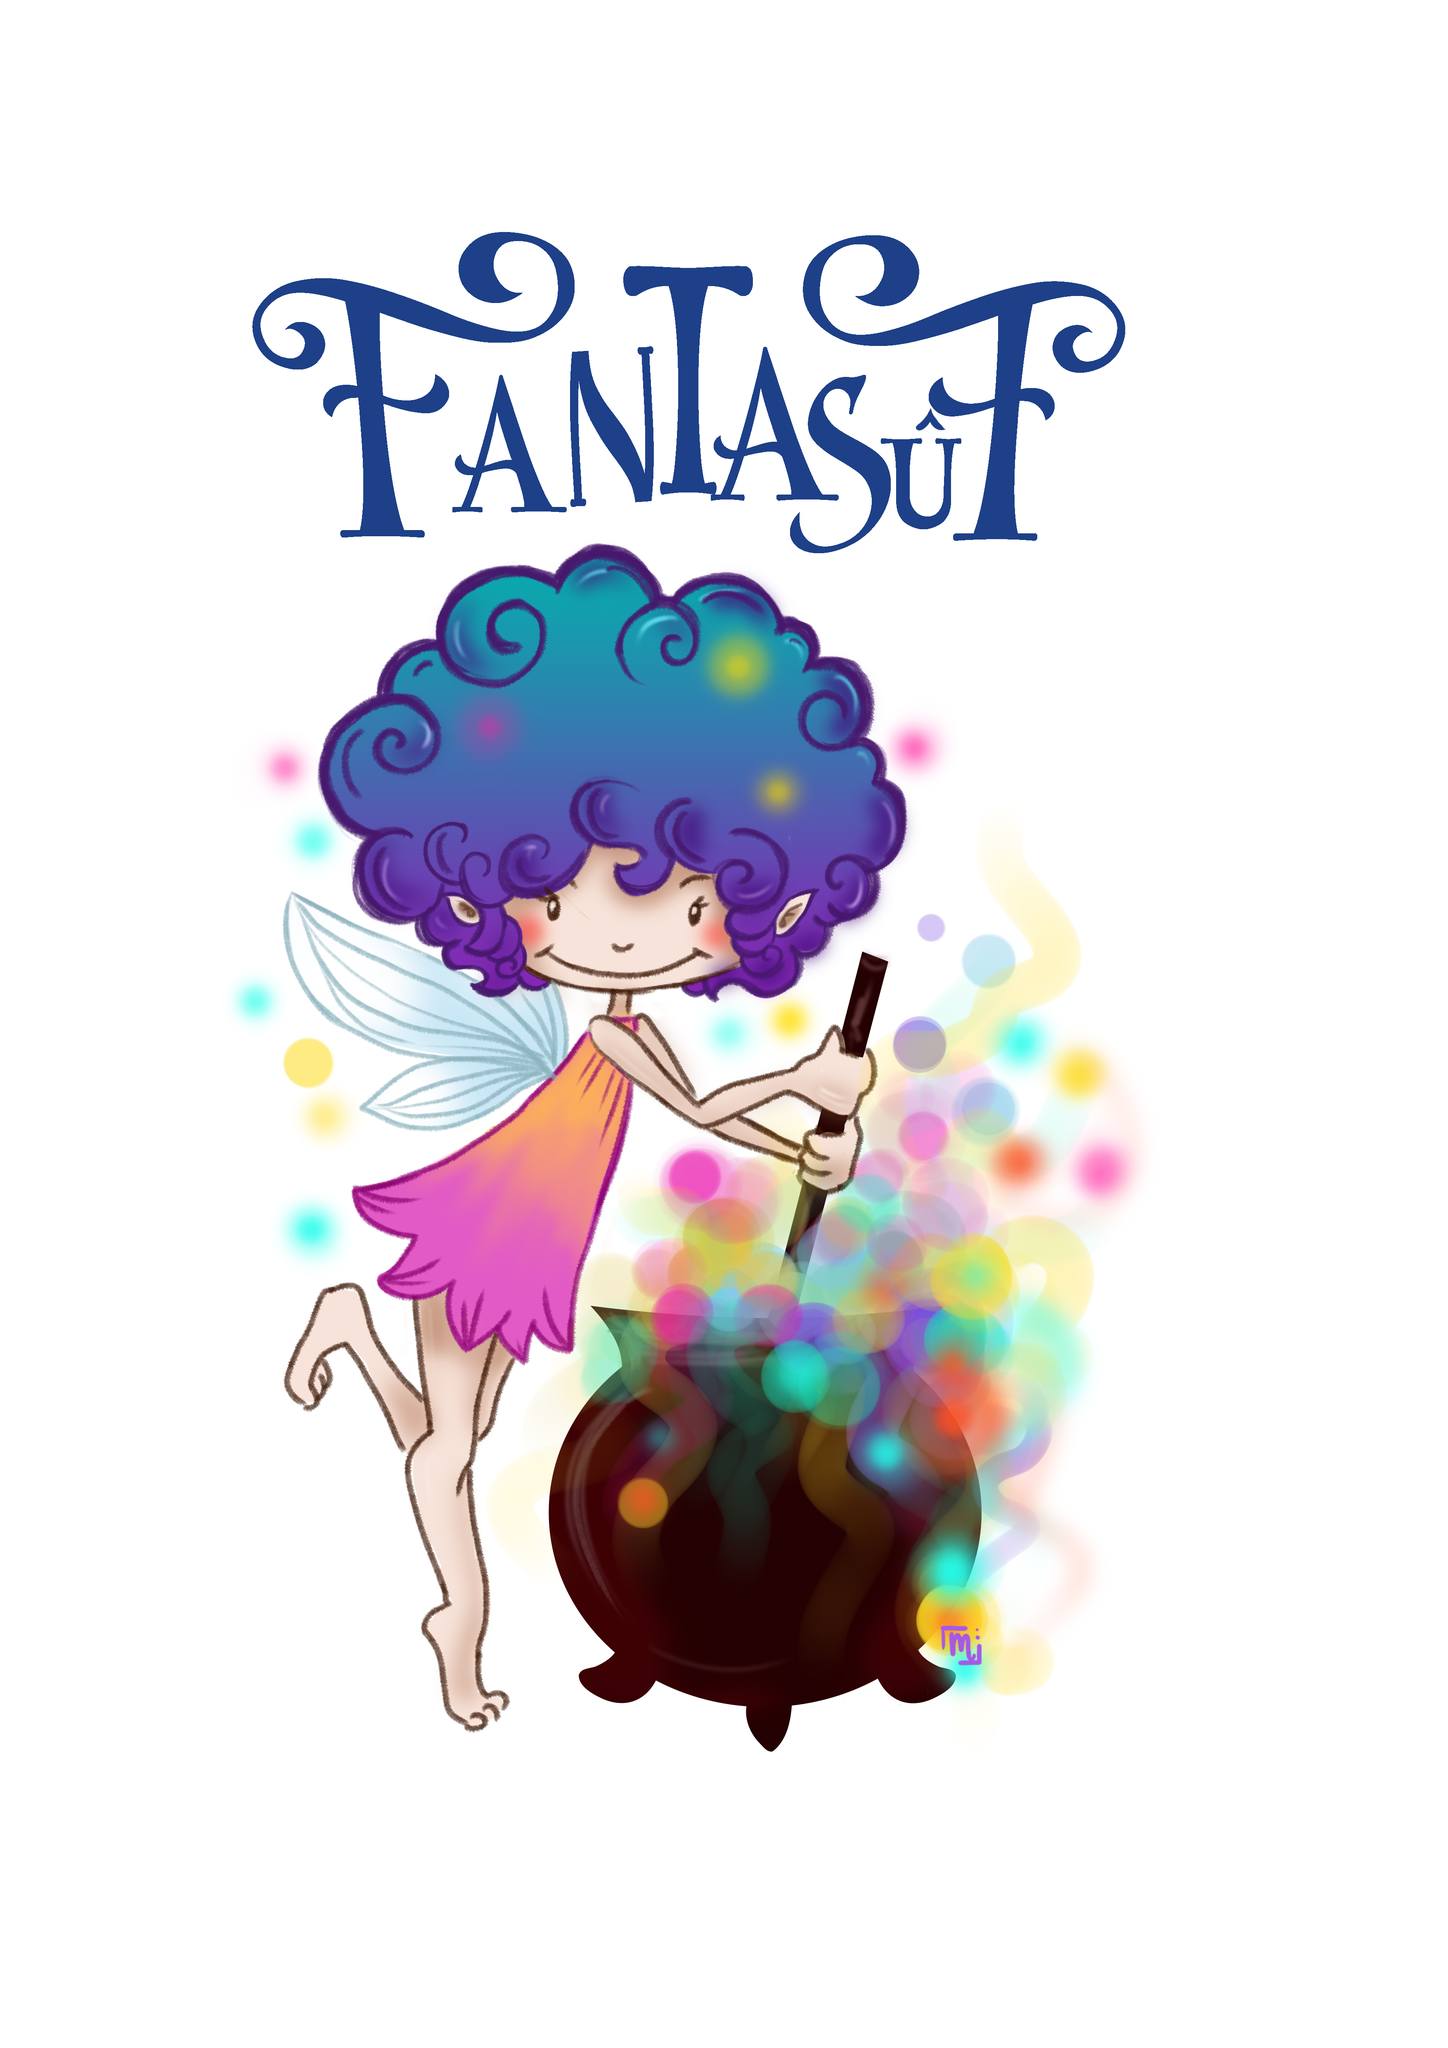 Fantasuf - Festival Fantasy